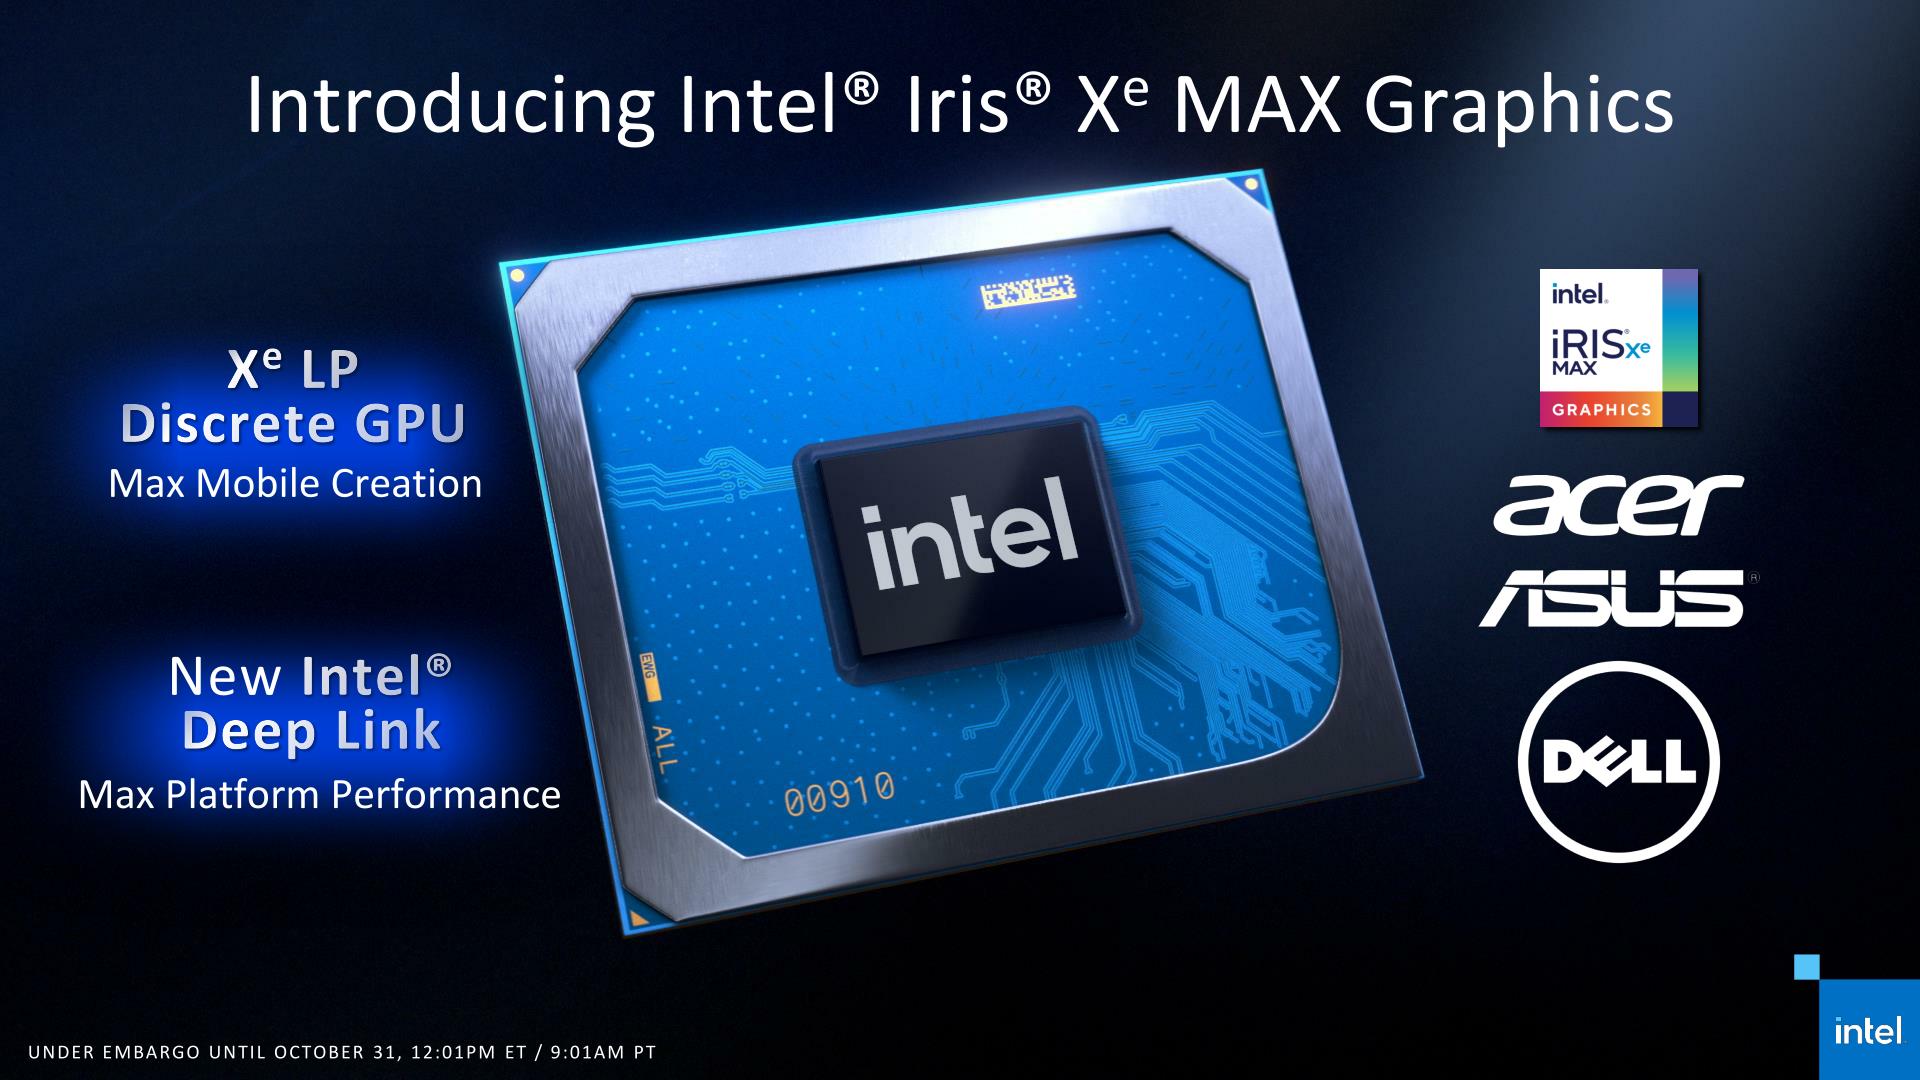 xe max deck 02 Intel เปิดตัวการ์ดจอ Iris Xe MAX รุ่นใหม่ล่าสุดที่ใช้งานในแล็ปท็อป